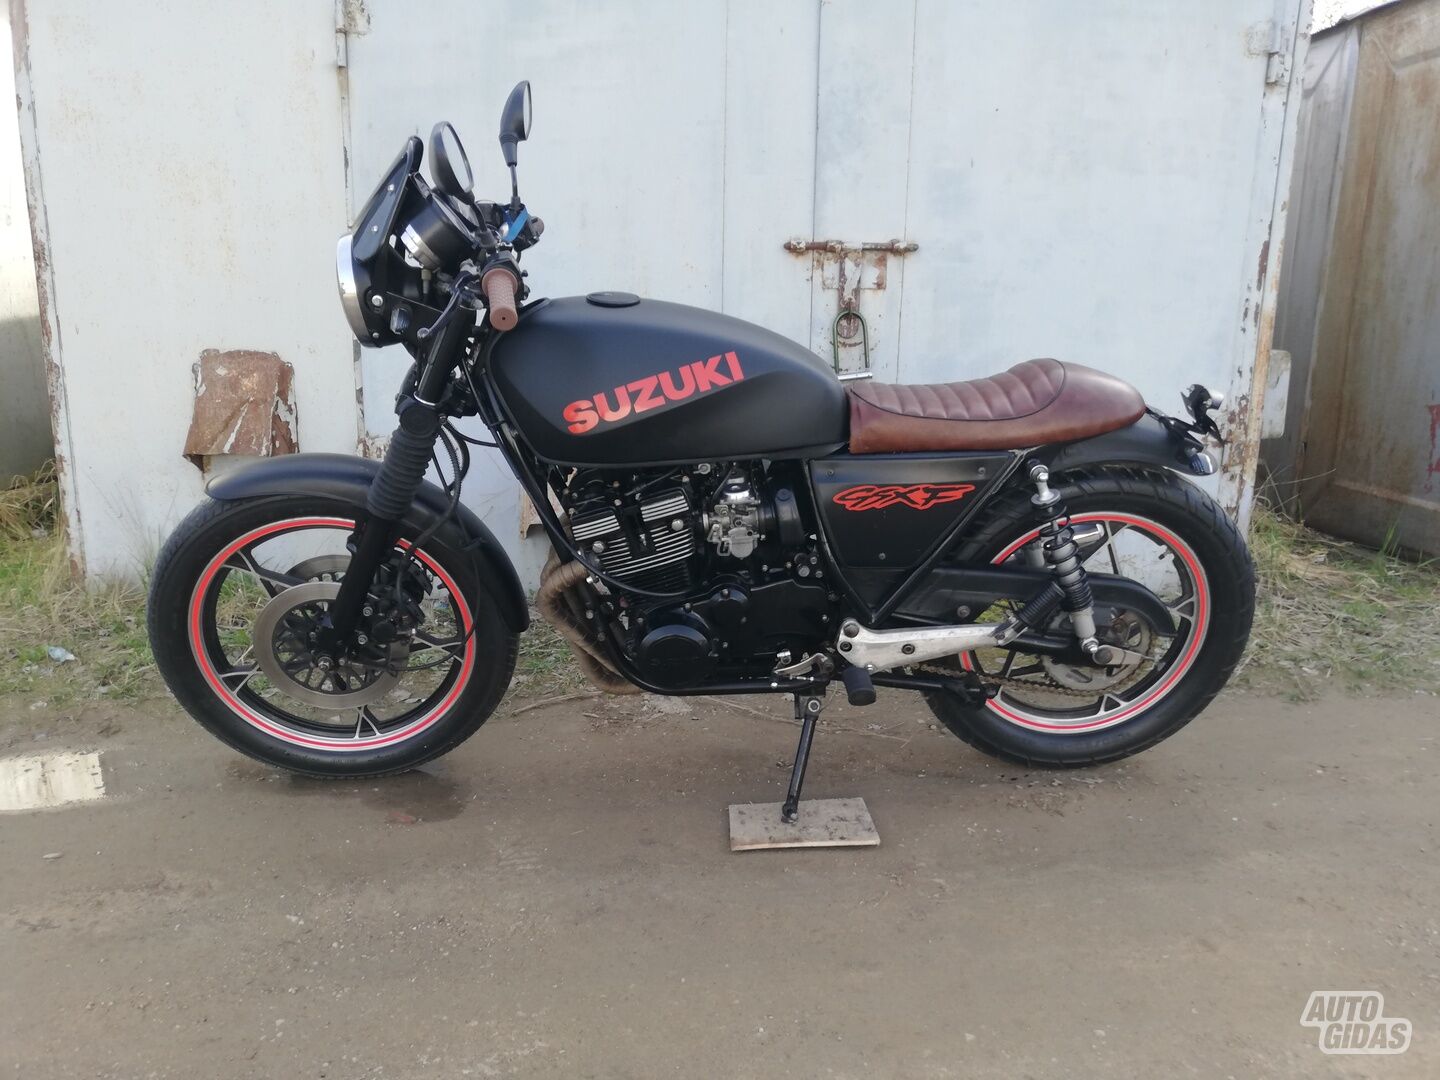 Suzuki GSX-F / Katana 1987 y Classical / Streetbike motorcycle